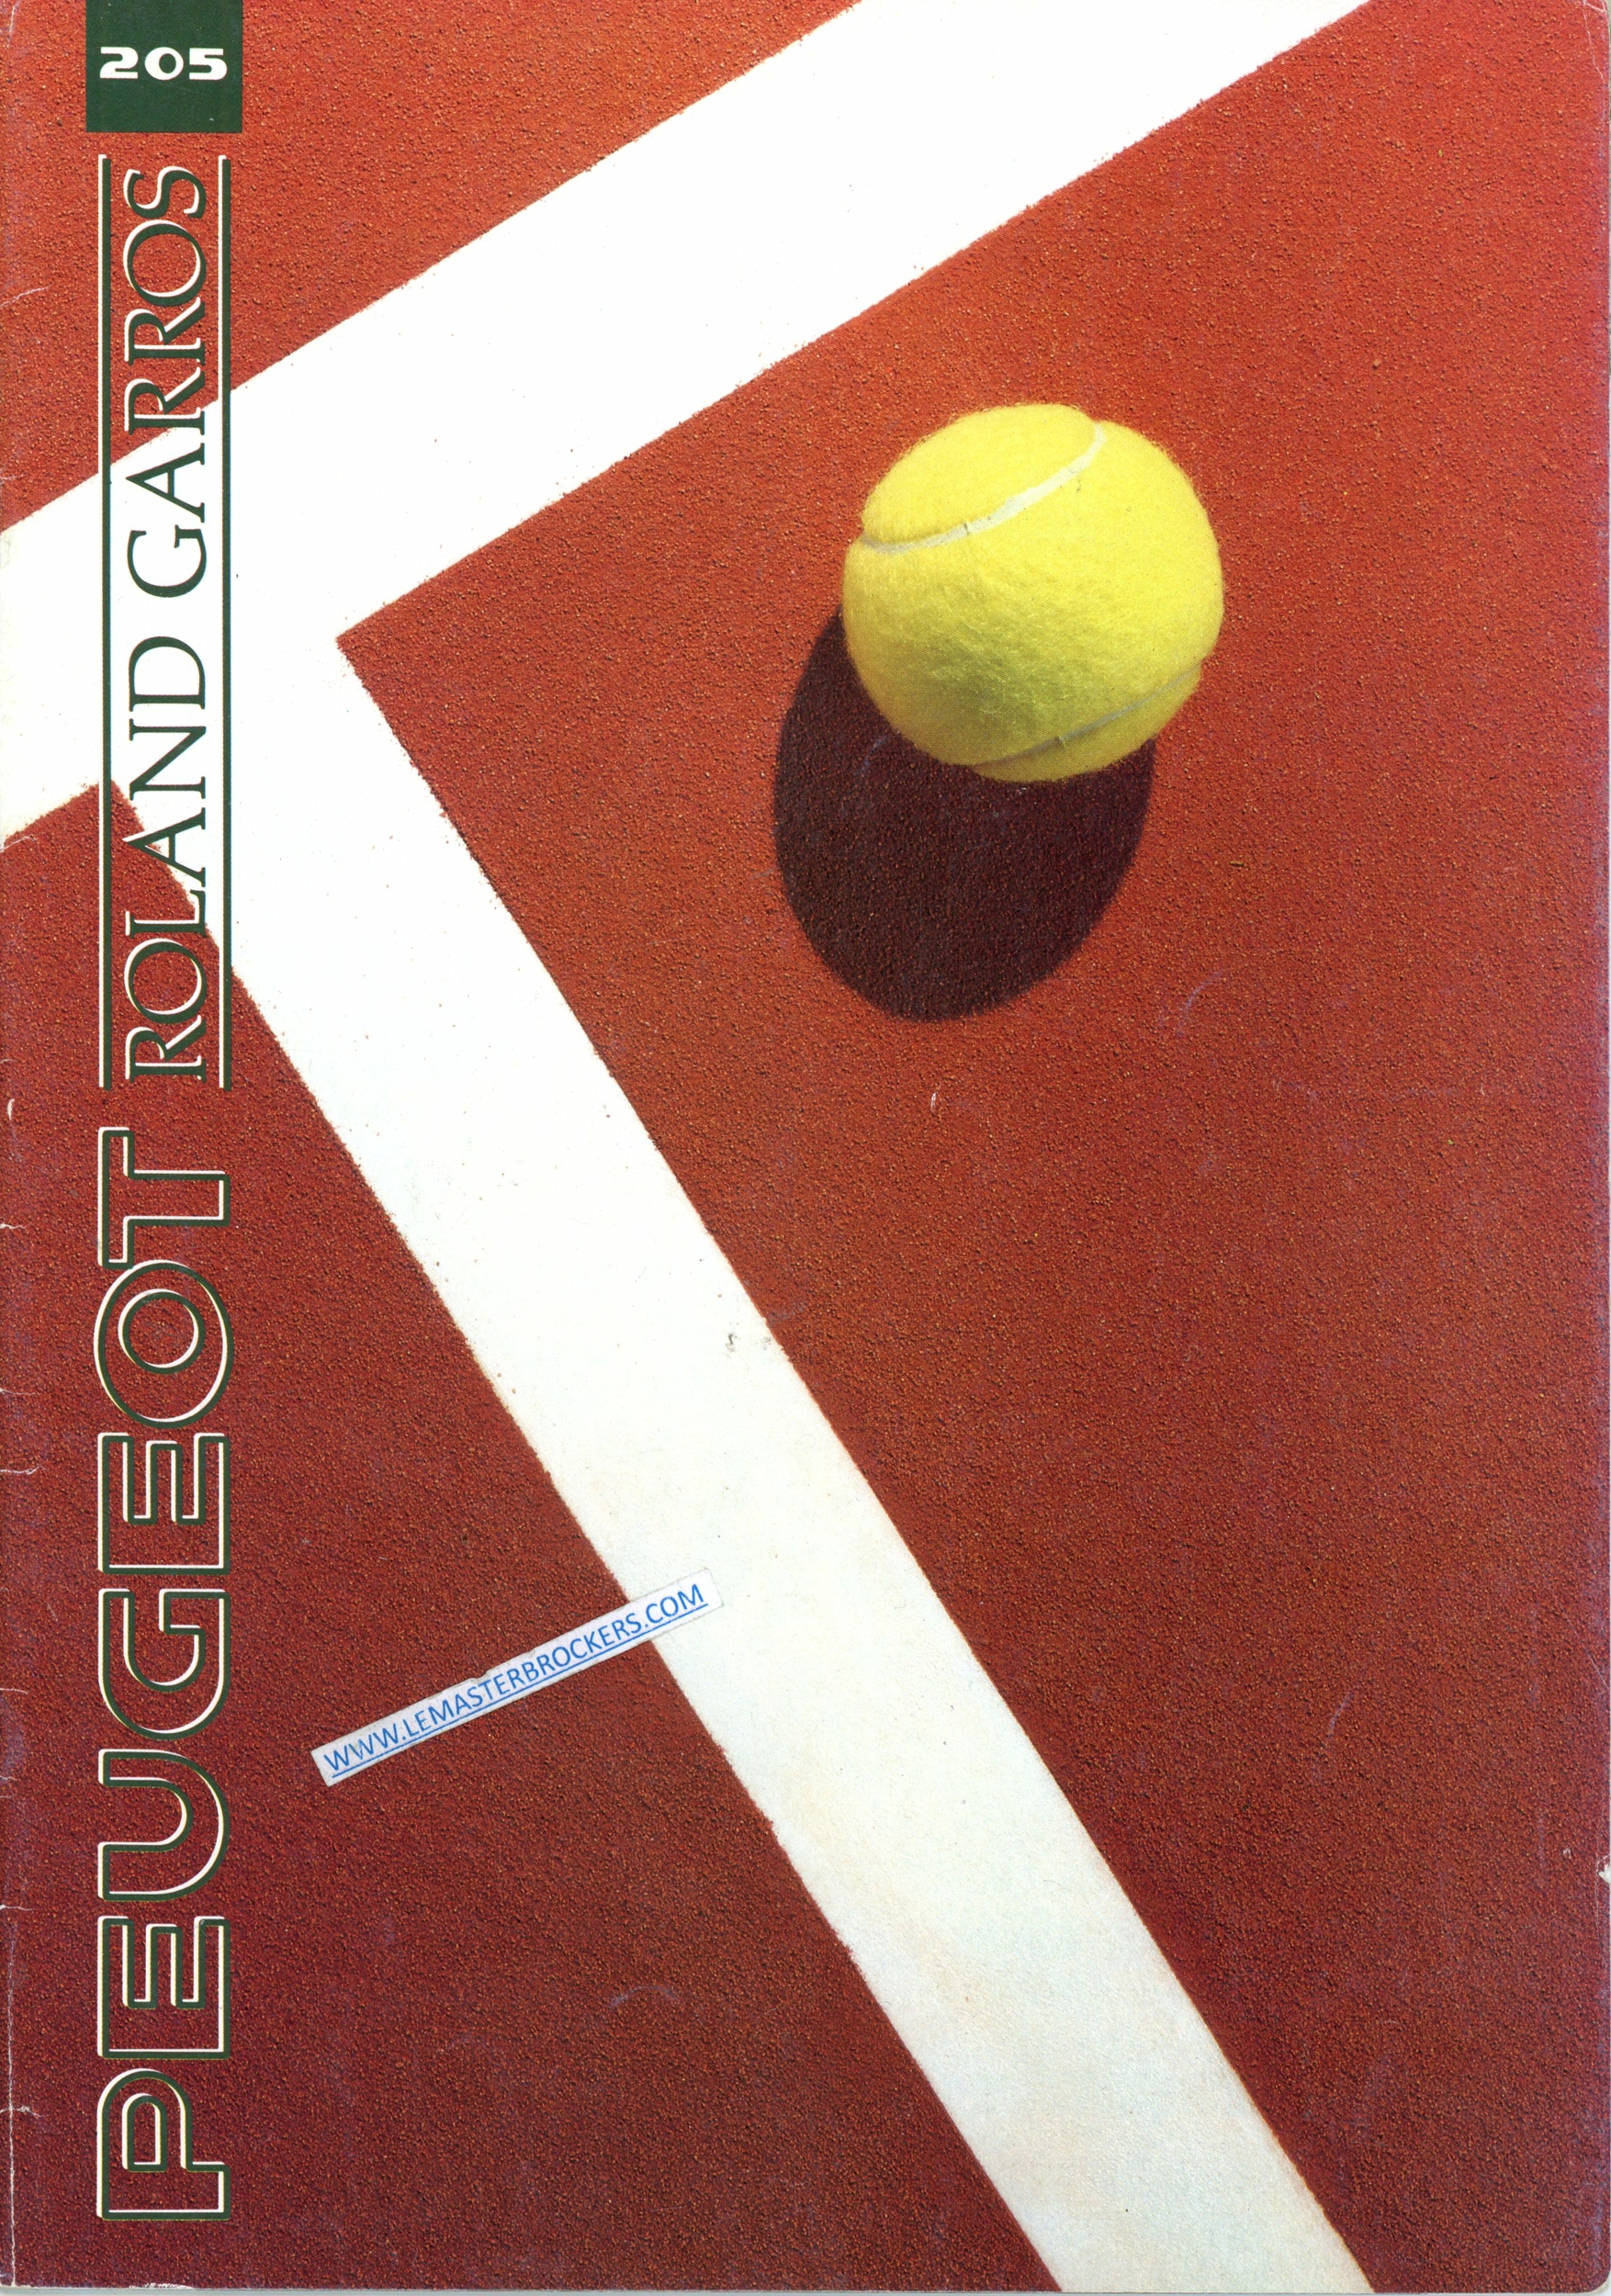 brochure PEUGEOT ROLAND GARROS 205 CABRIOLET ET 3 PORTES 1991